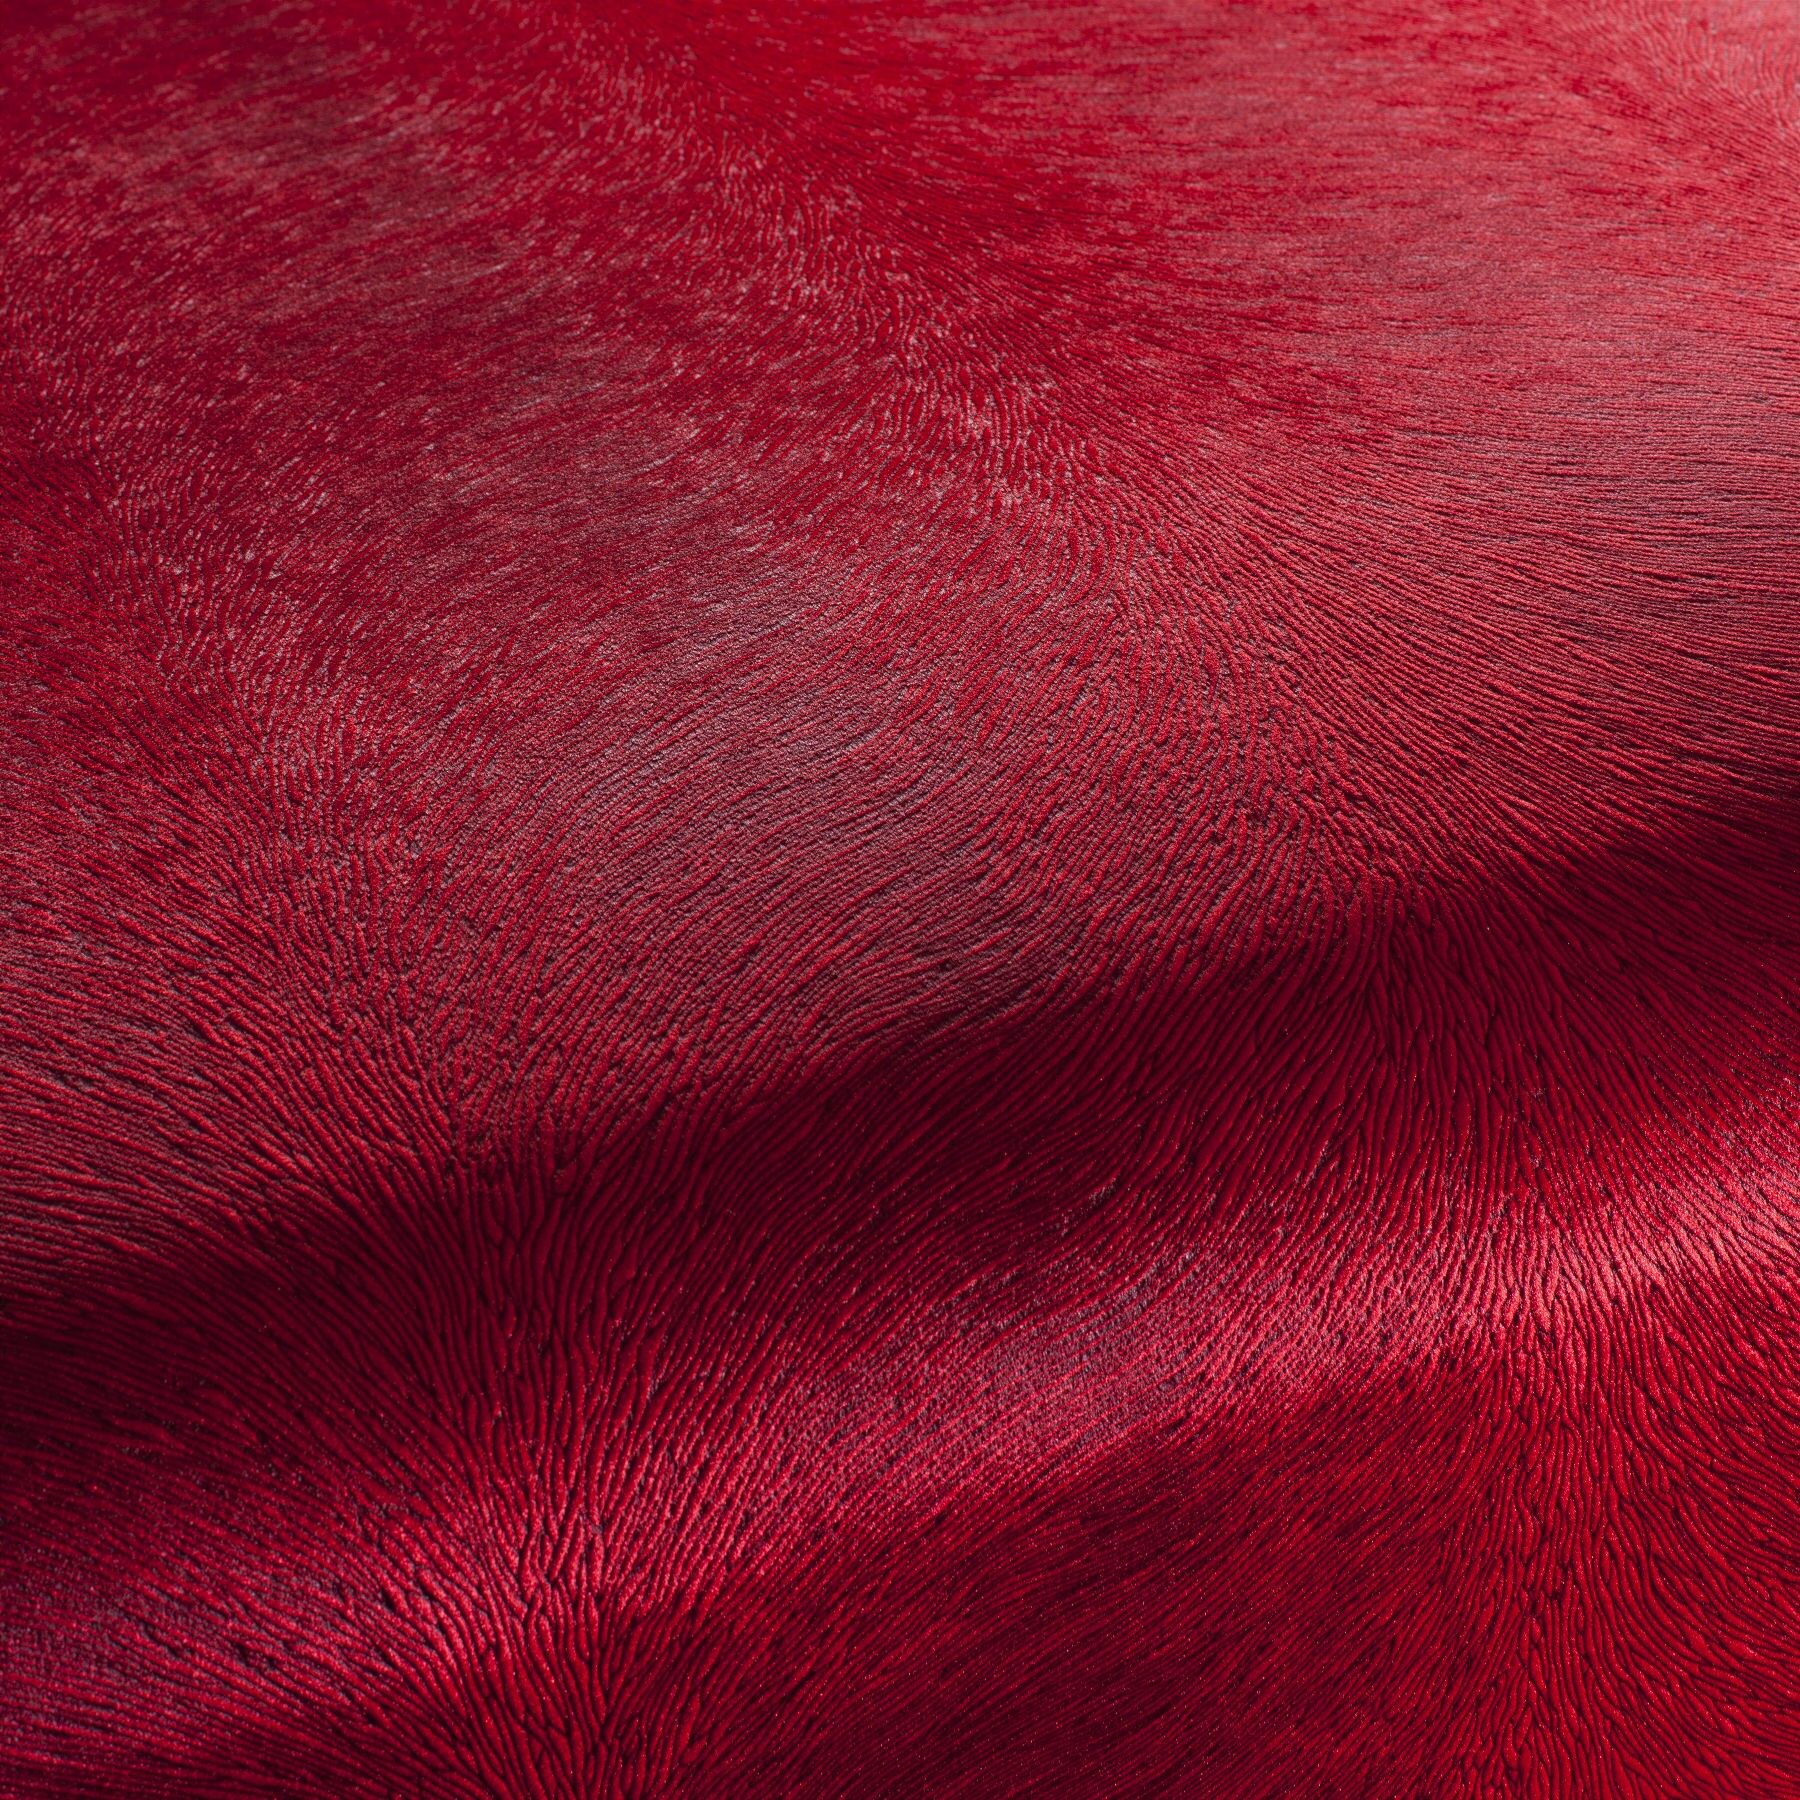 Ca1292 012 Pistoia Velvet Exklusive Italienische Samt Moebelstoffe Stoffe Rot Braun